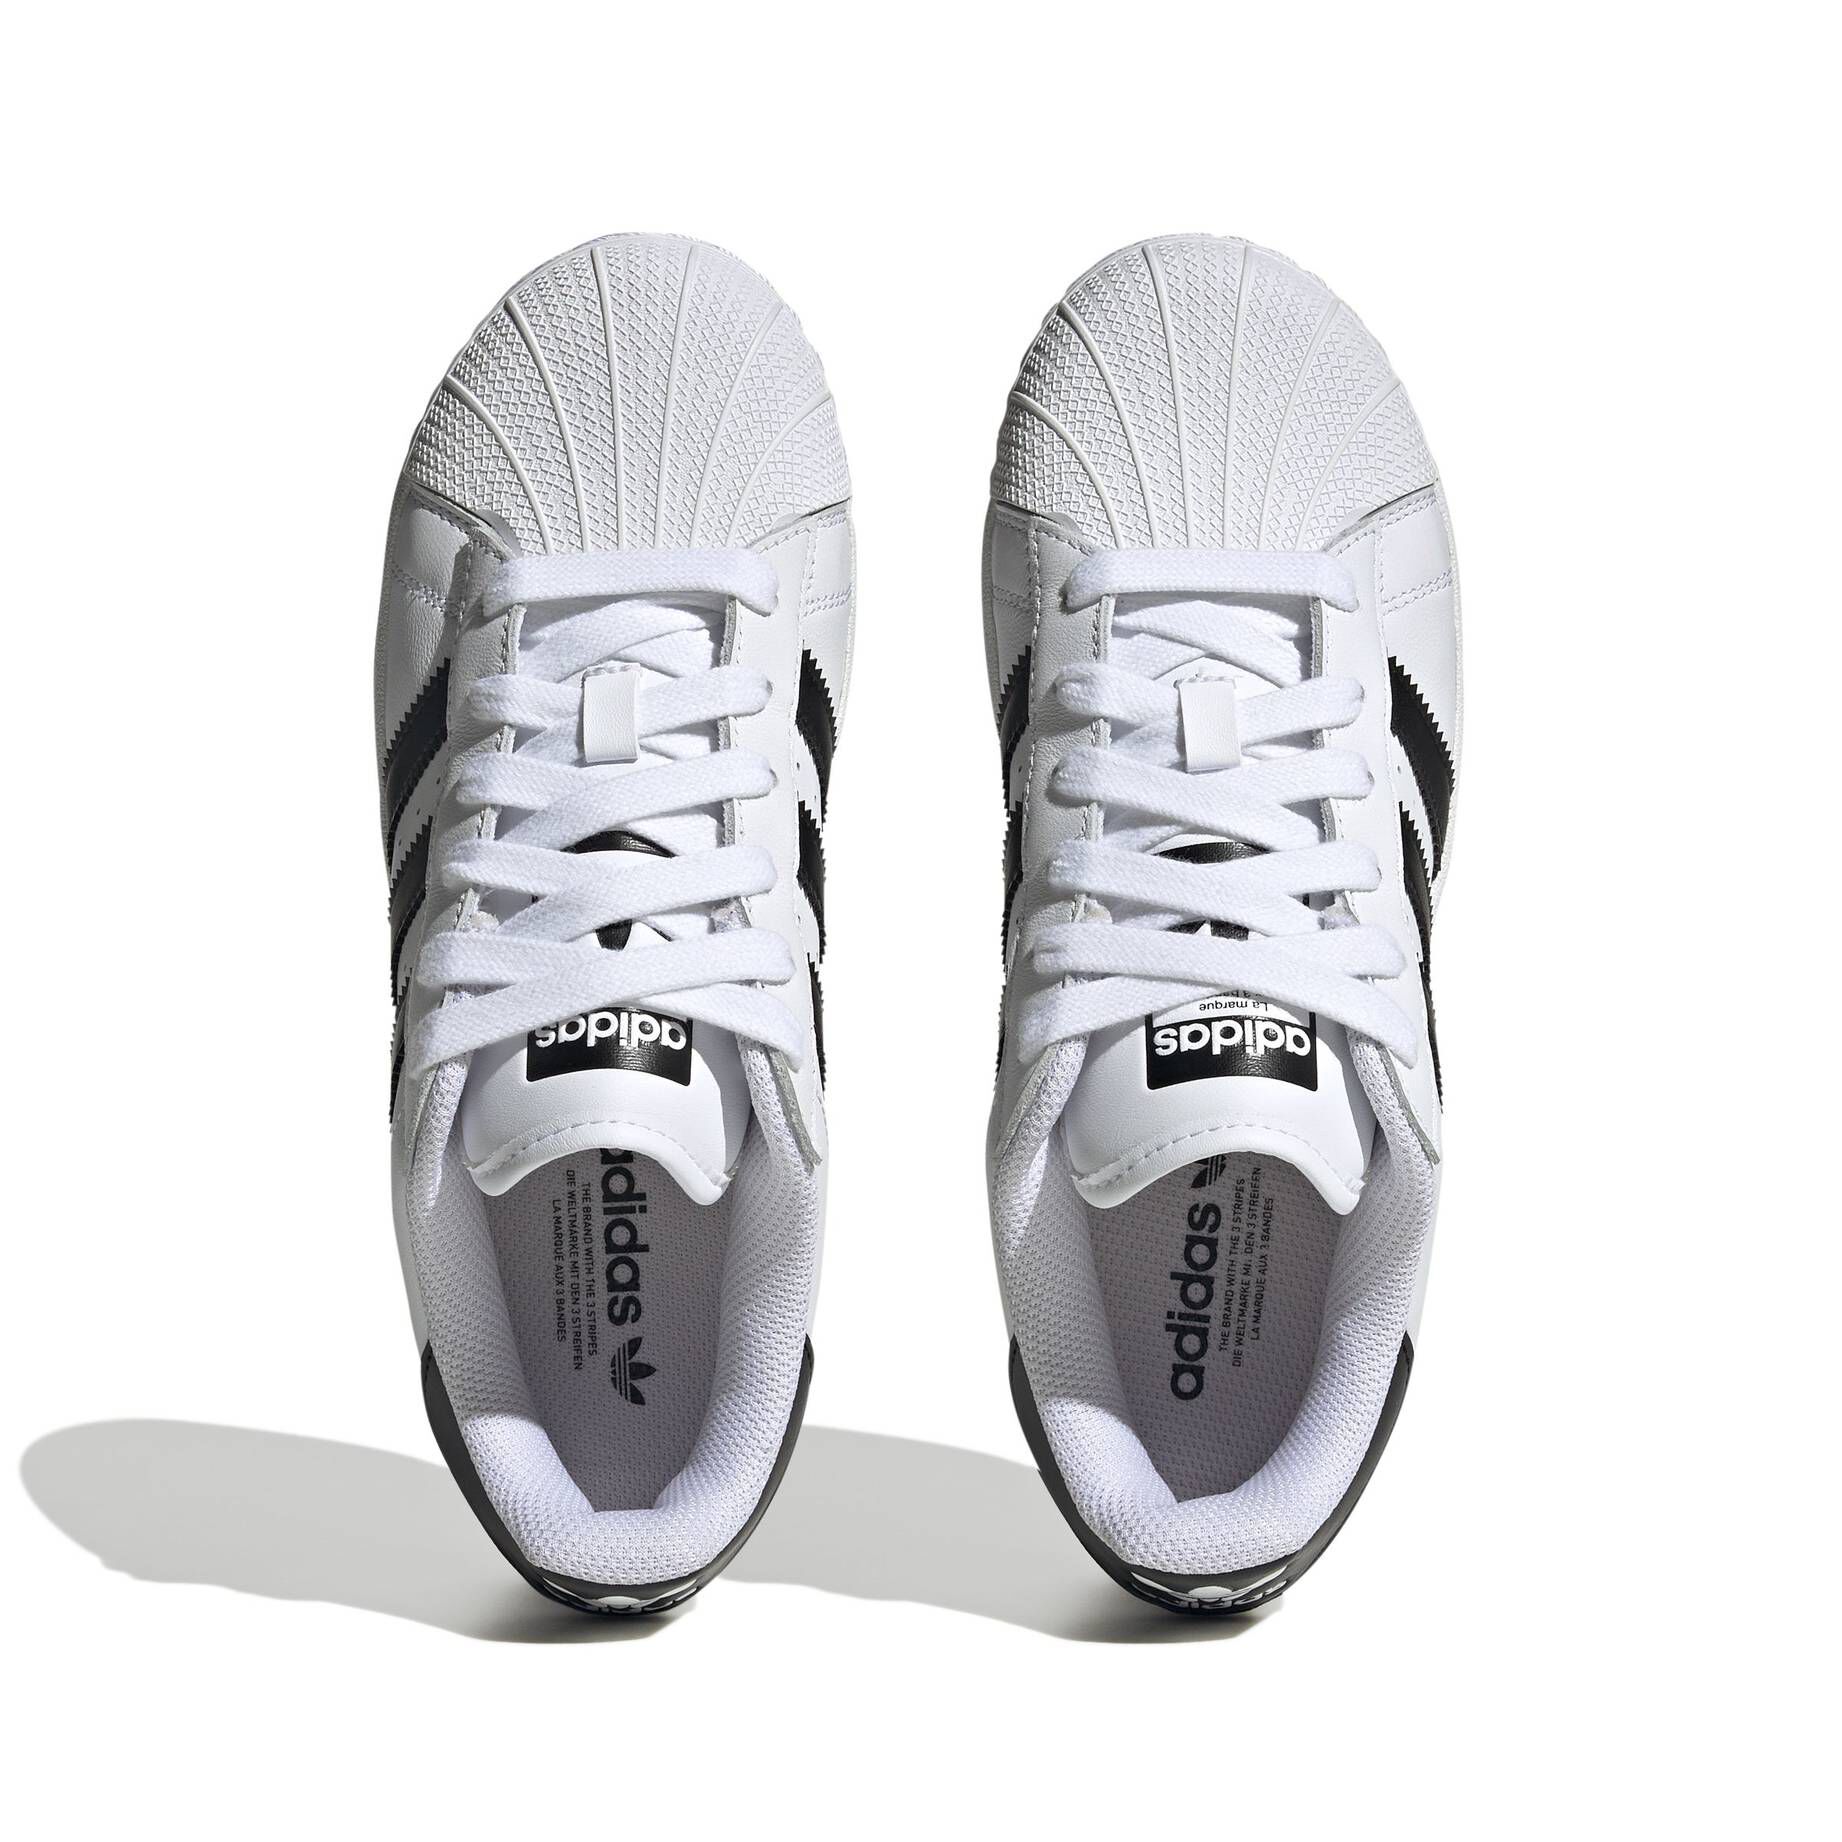 XLG Sneaker adidas SUPERSTAR kaufen Damen engelhorn Originals |